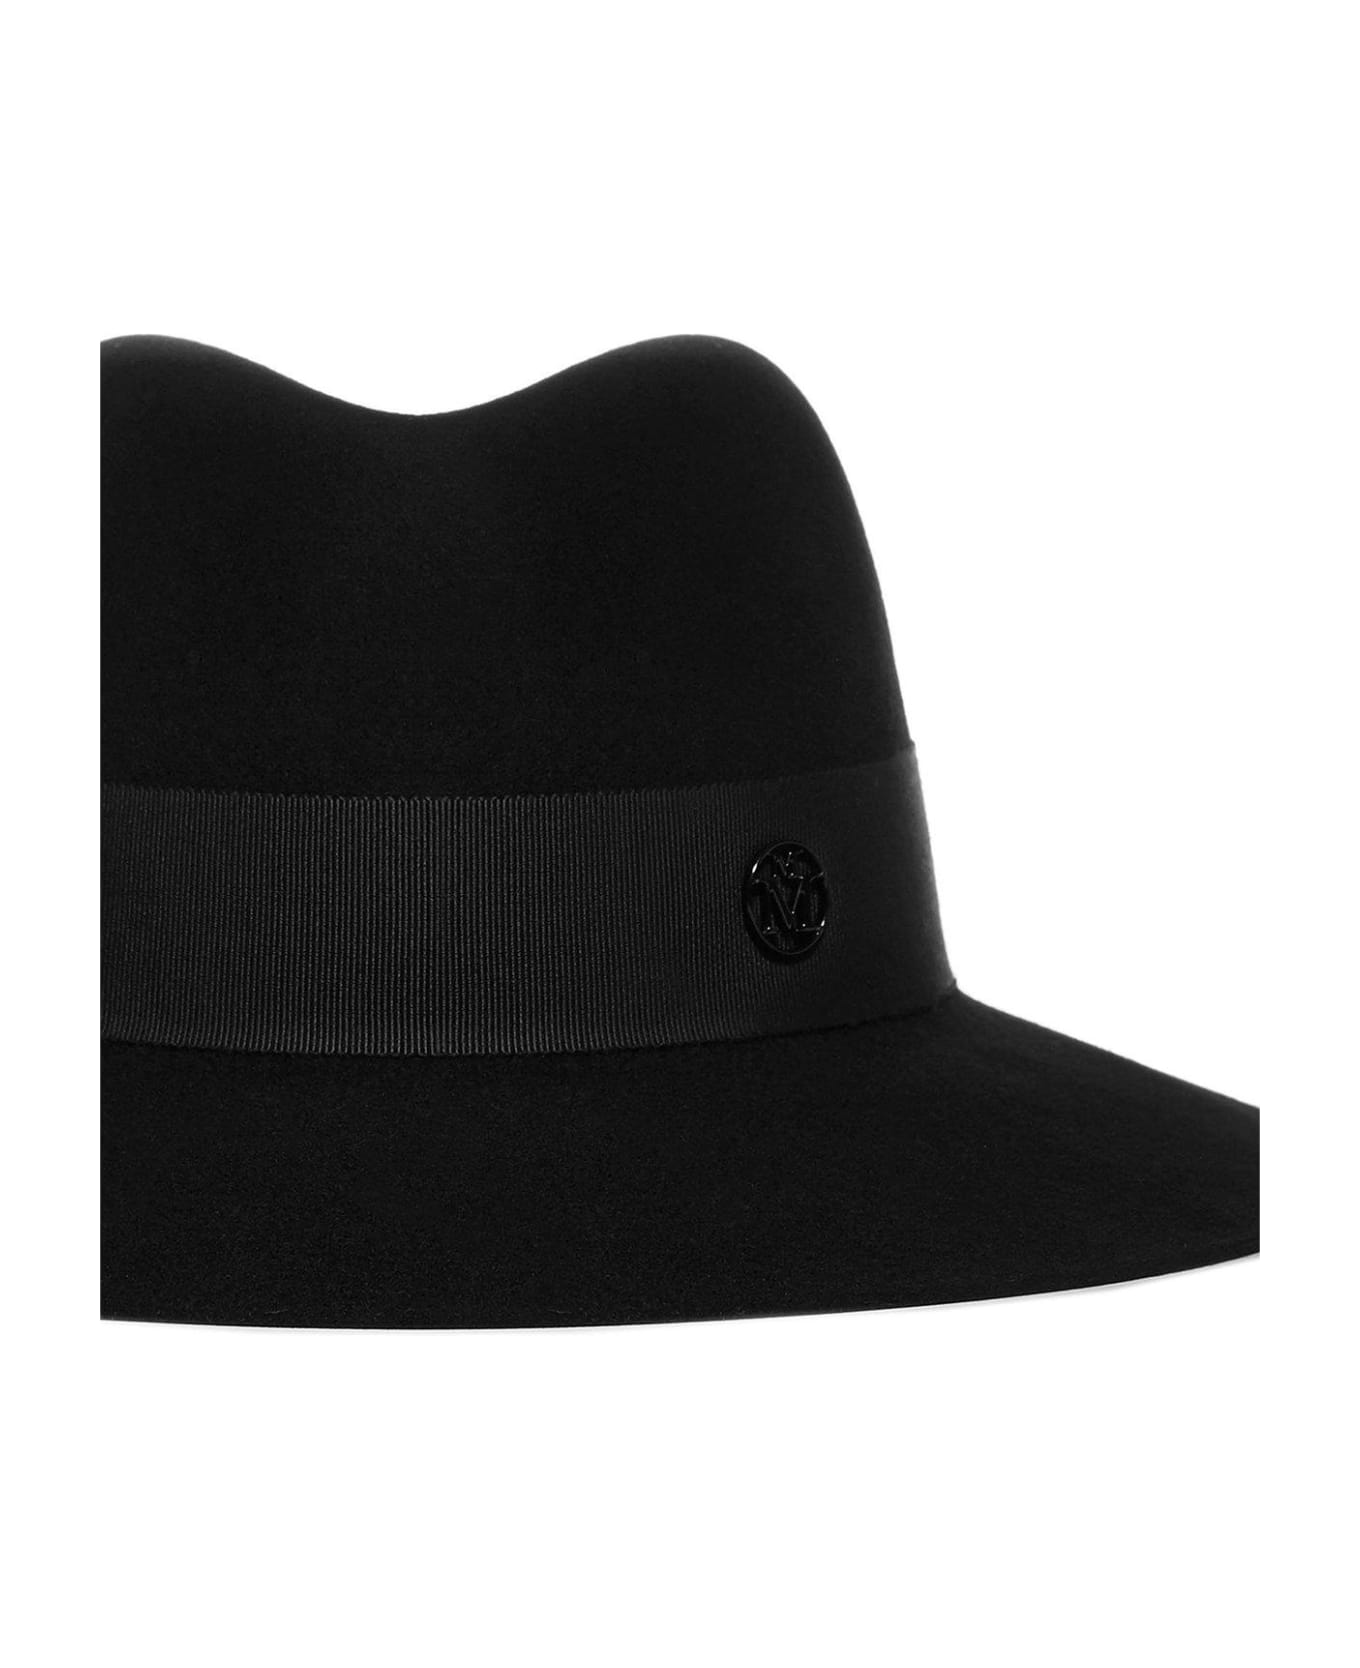 Maison Michel Kate Fedora Hat - Black